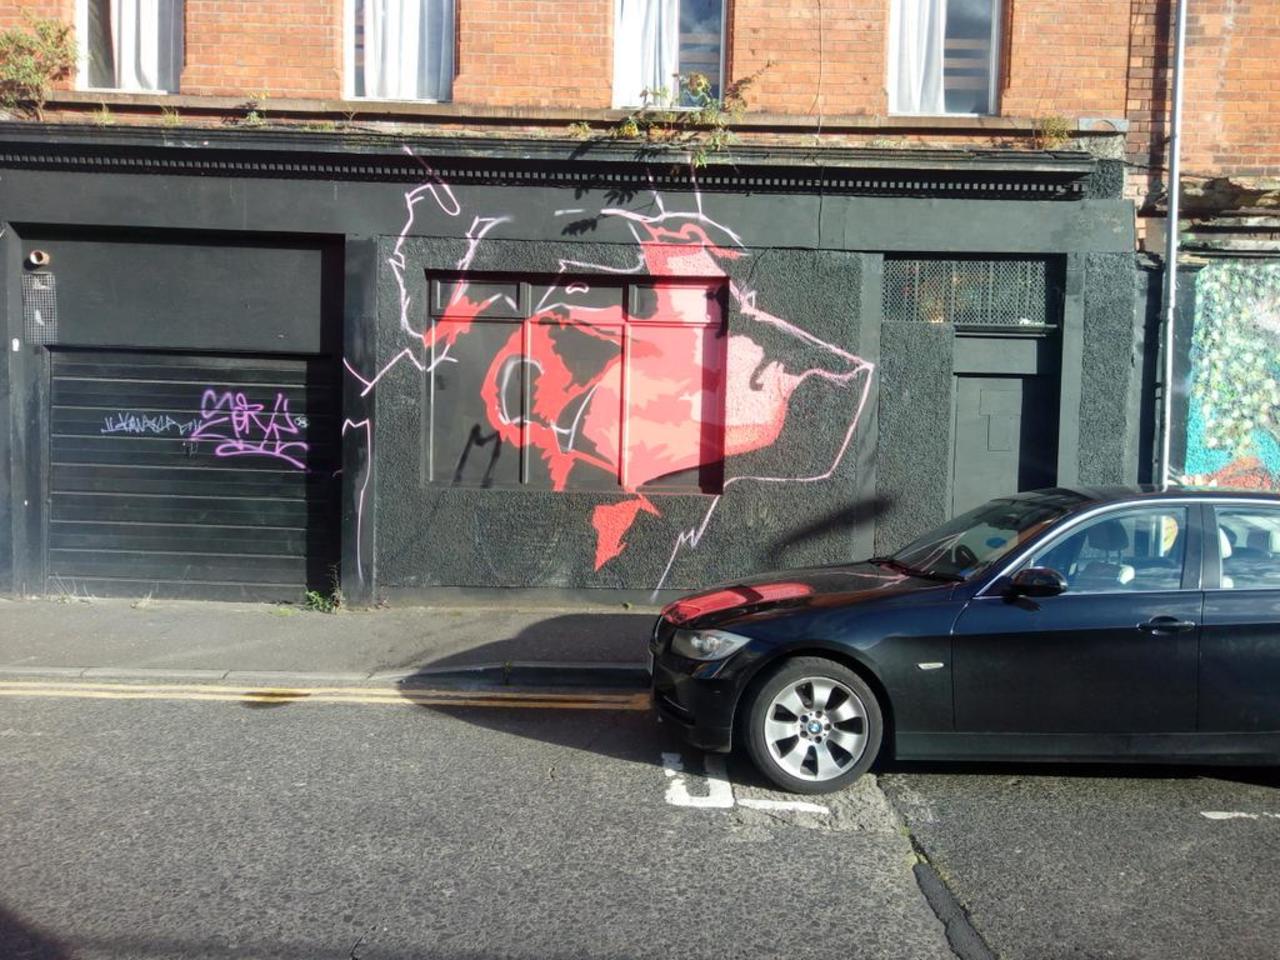 Very cool  RT @bohoman: New Dog #StreetArt in Belfast City Centre.
Sun 4th Oct 2015.
#BeMoreDog #Graffiti http://t.co/ZADbnDGixR